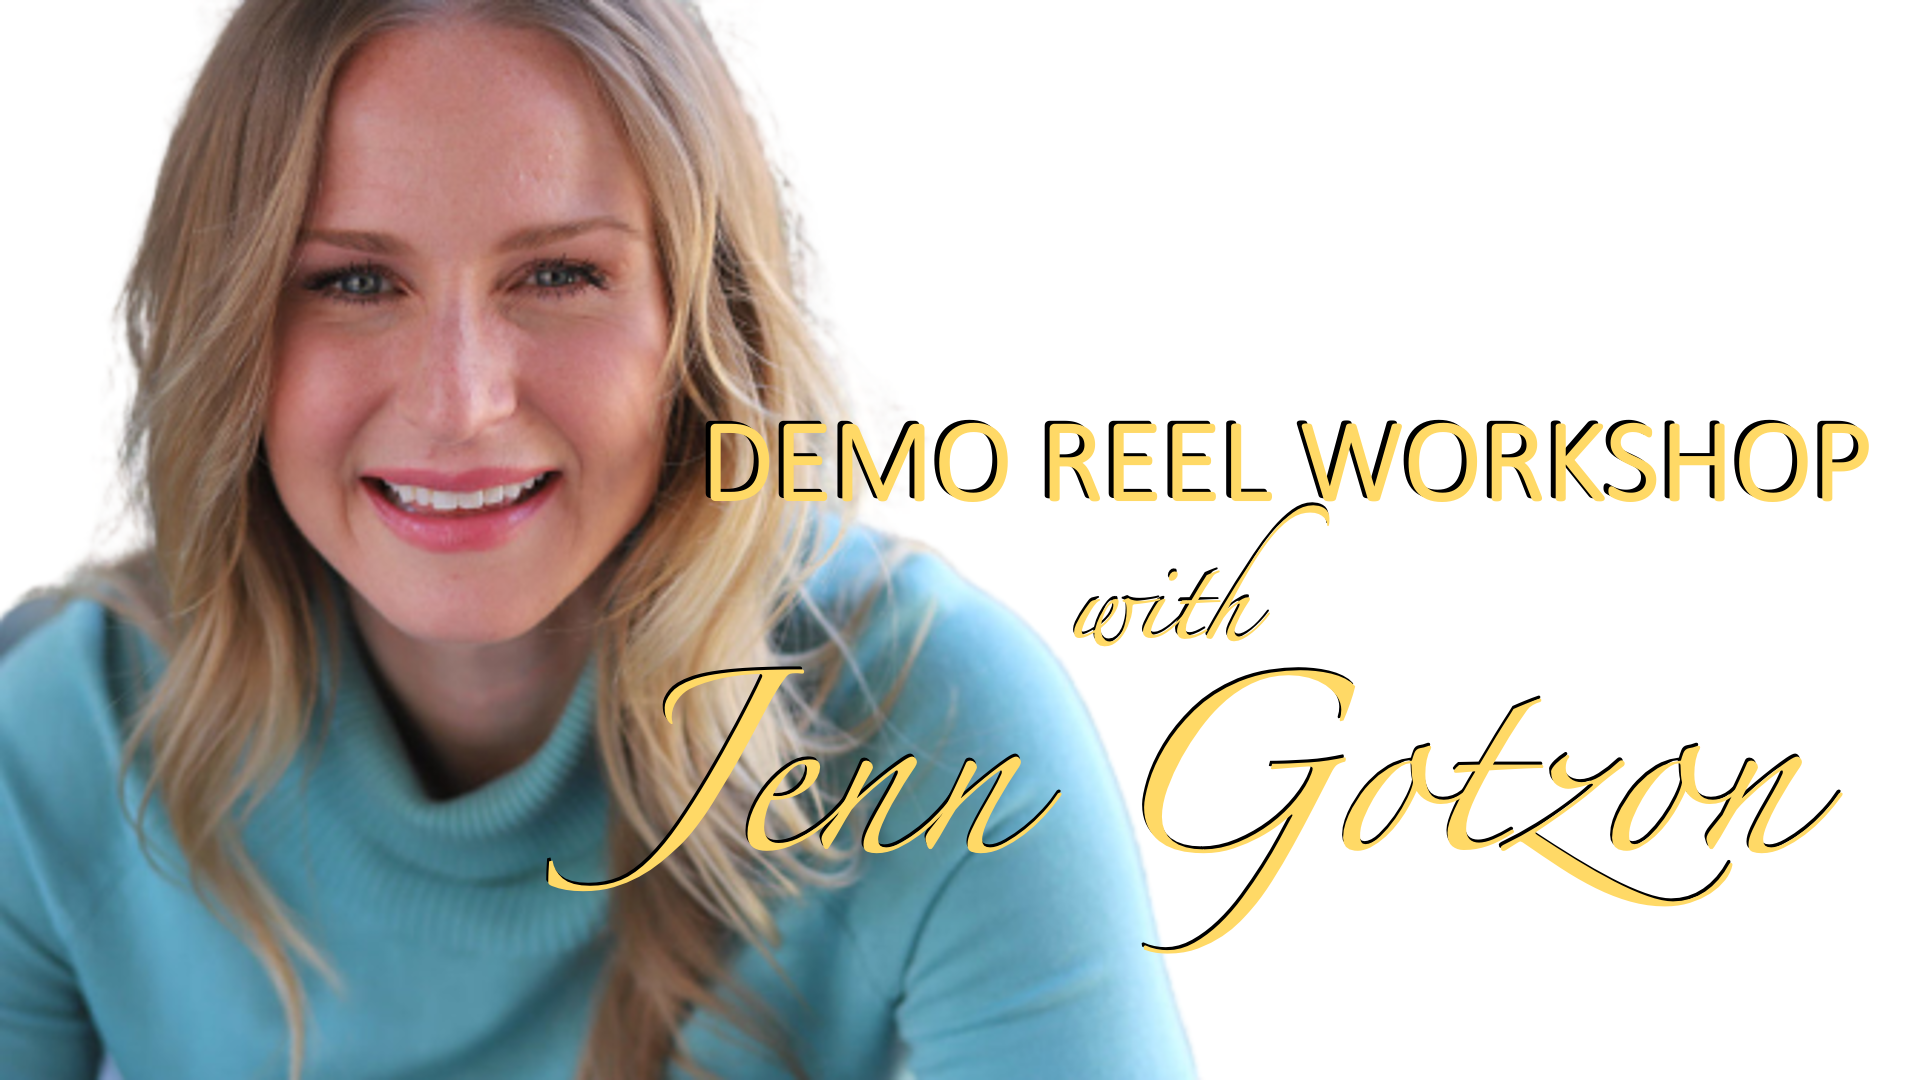 Demo Reel Workshop with Jenn Gotzon  Copy